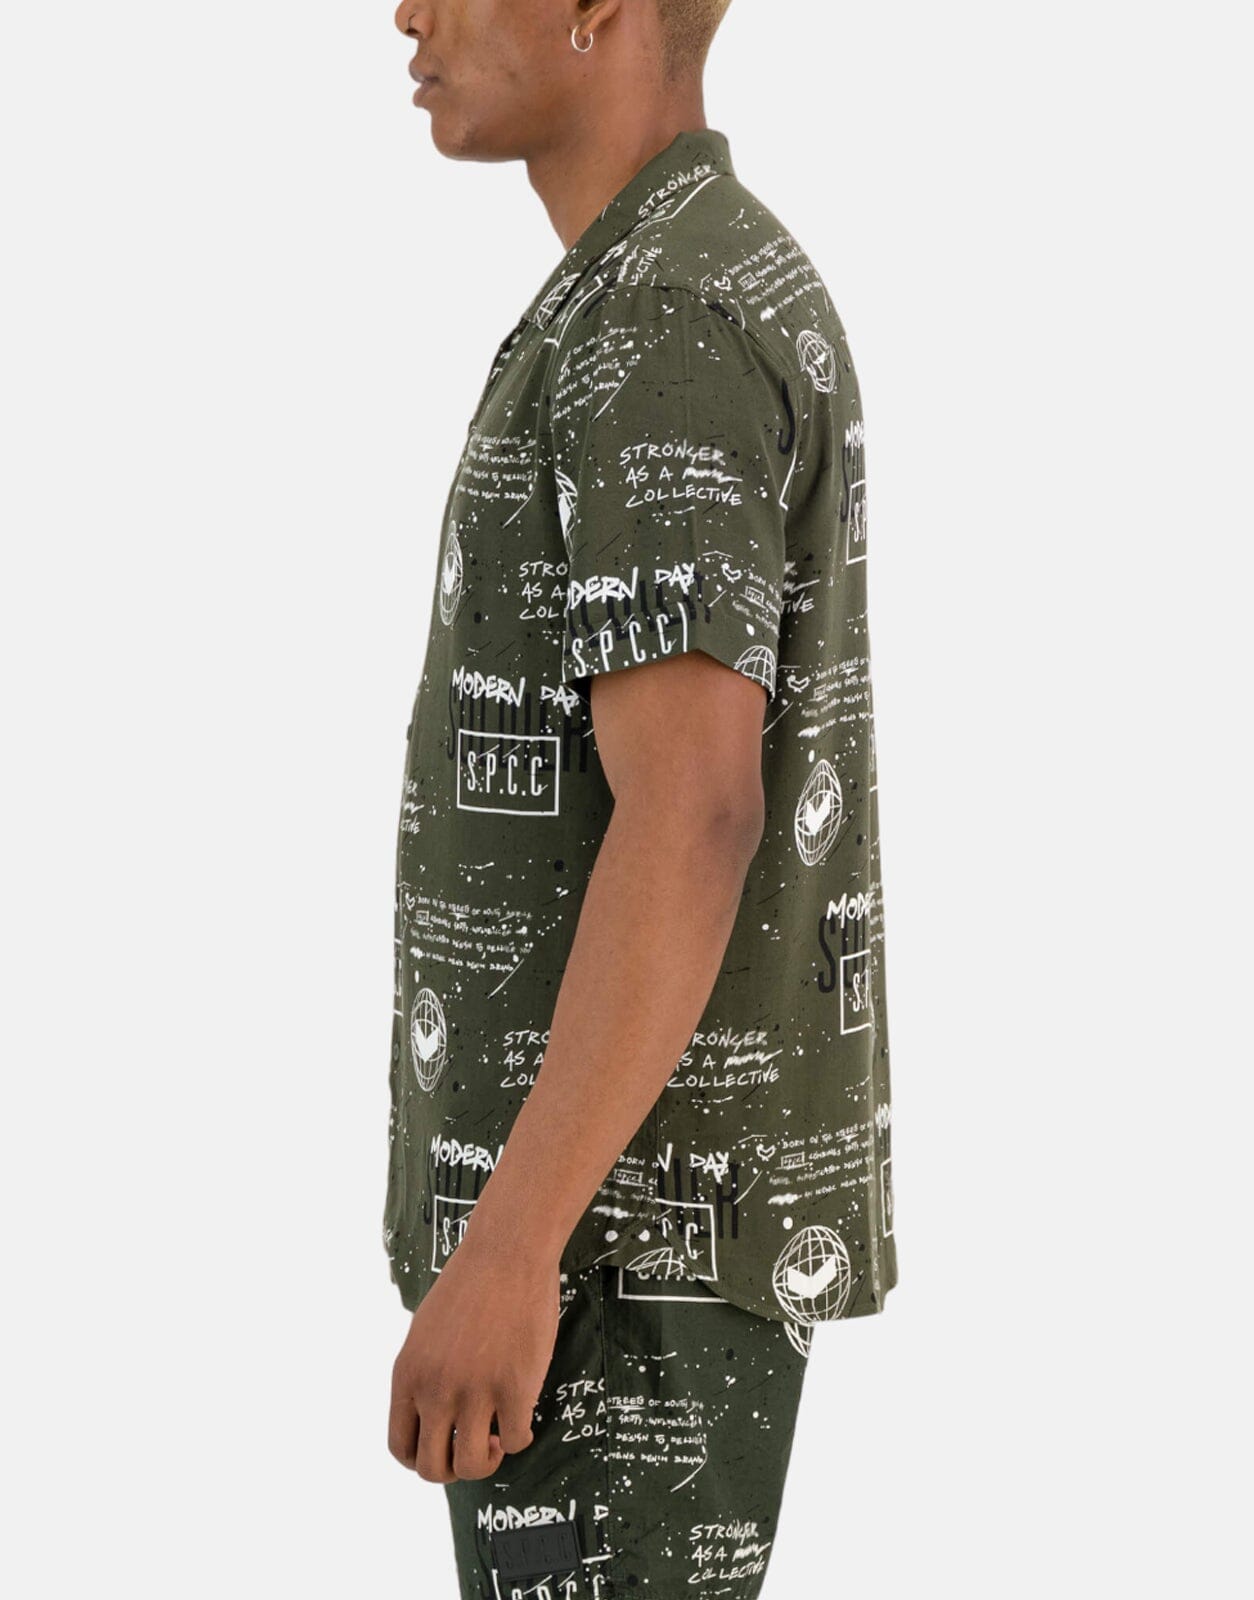 SPCC Kepler Fatigue Shirt - Subwear